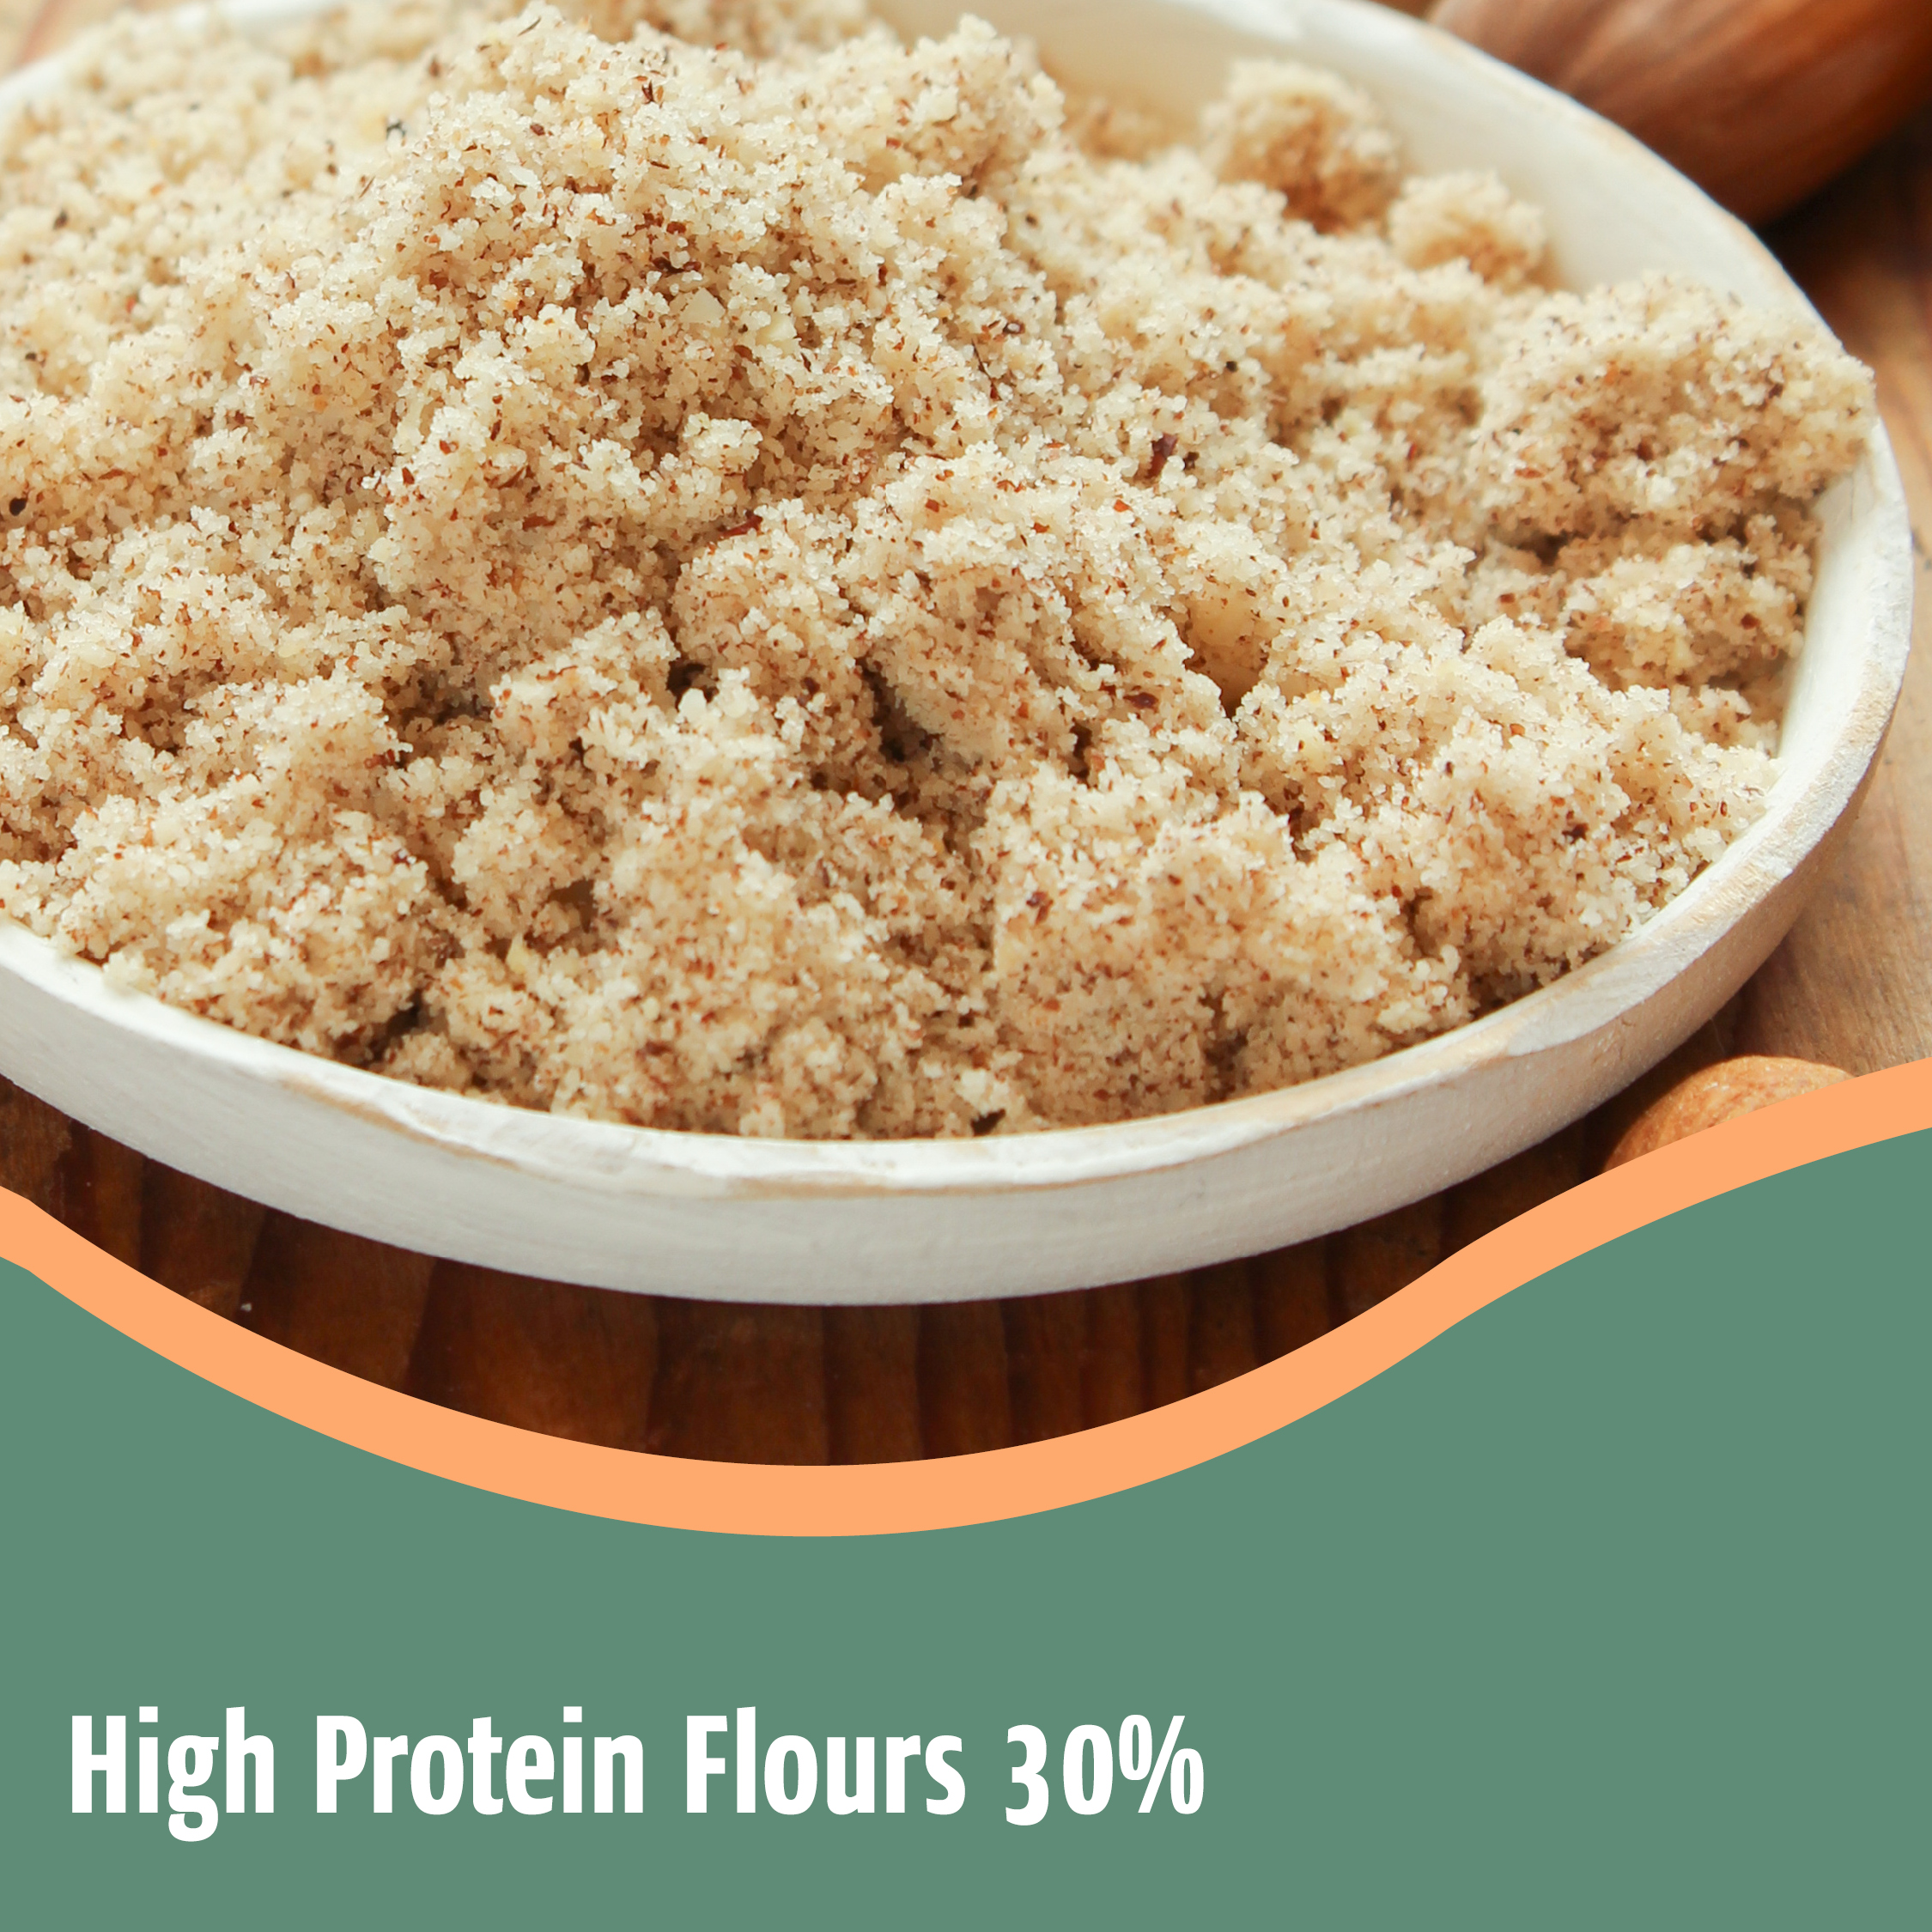 High Protein Nut Flours 30%